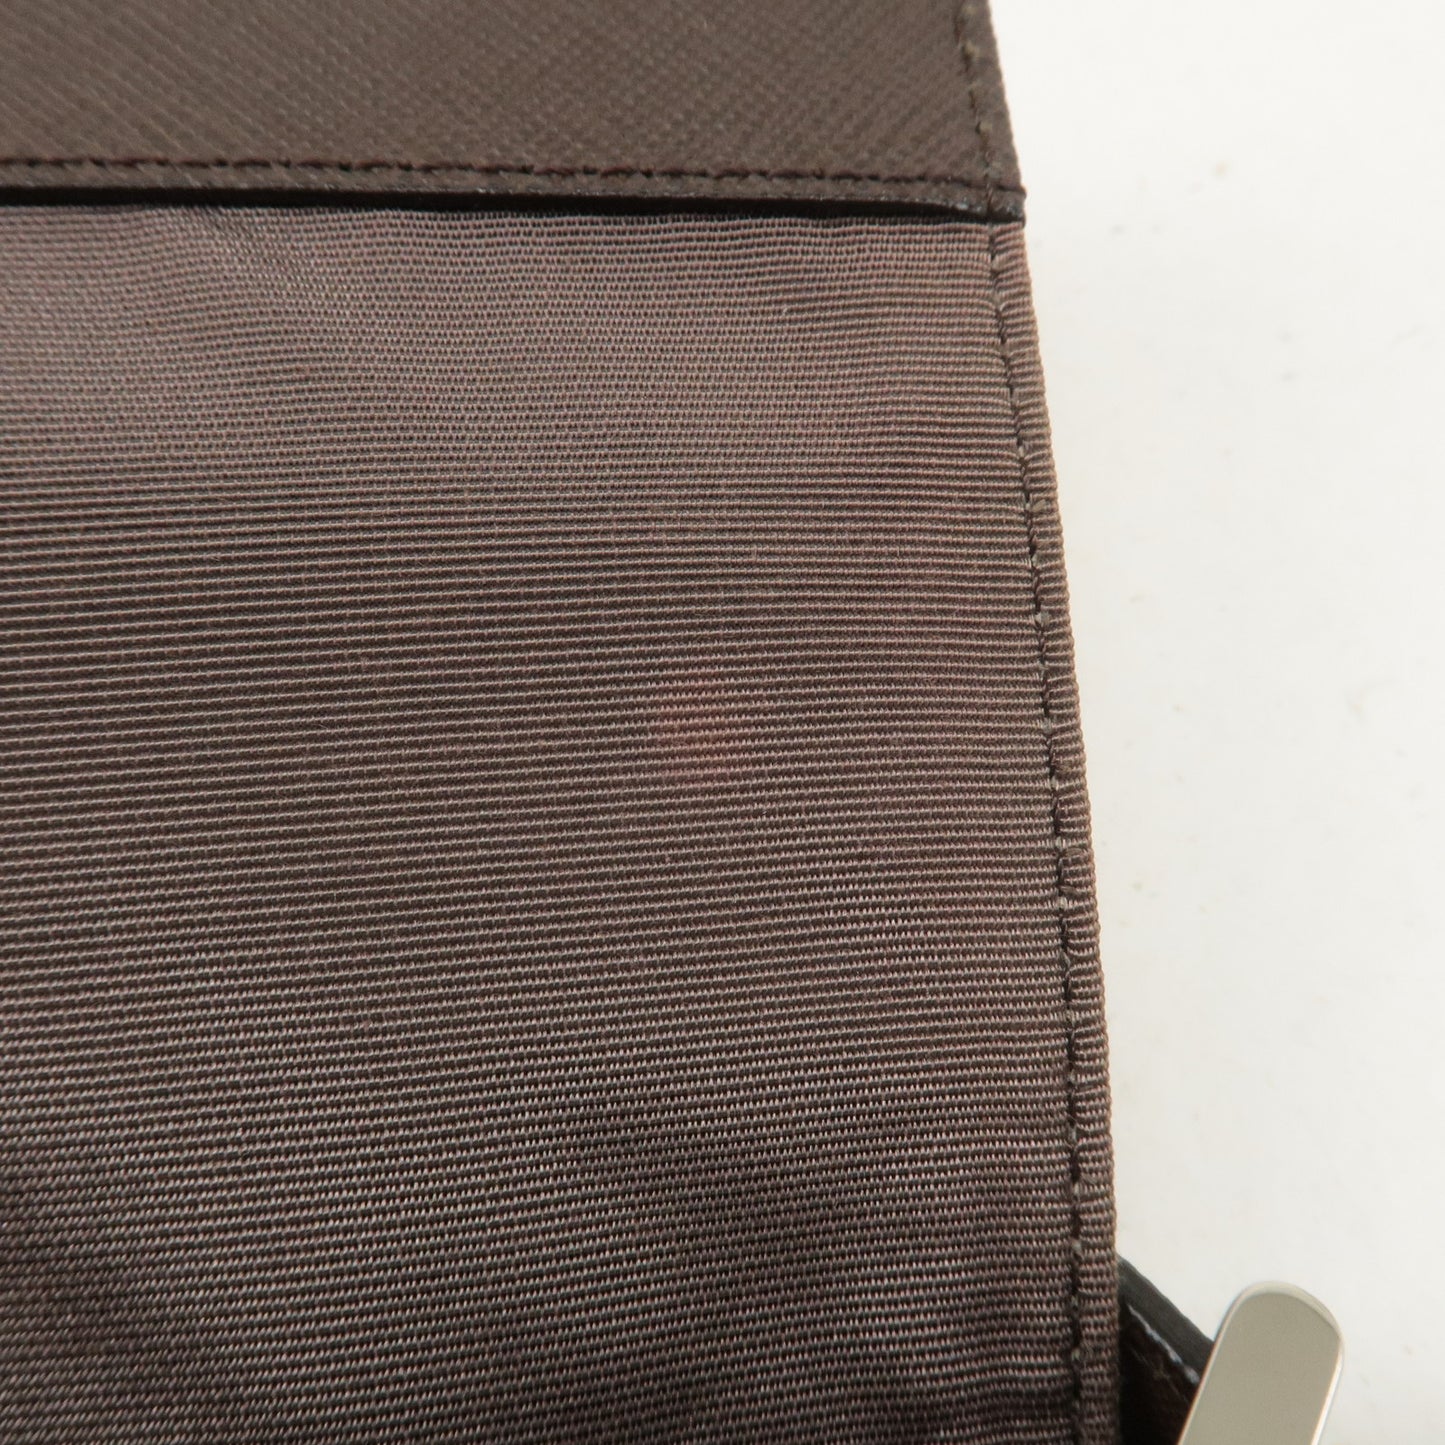 Burberry Nova Plaid Canvas Leather Shoulder Bag